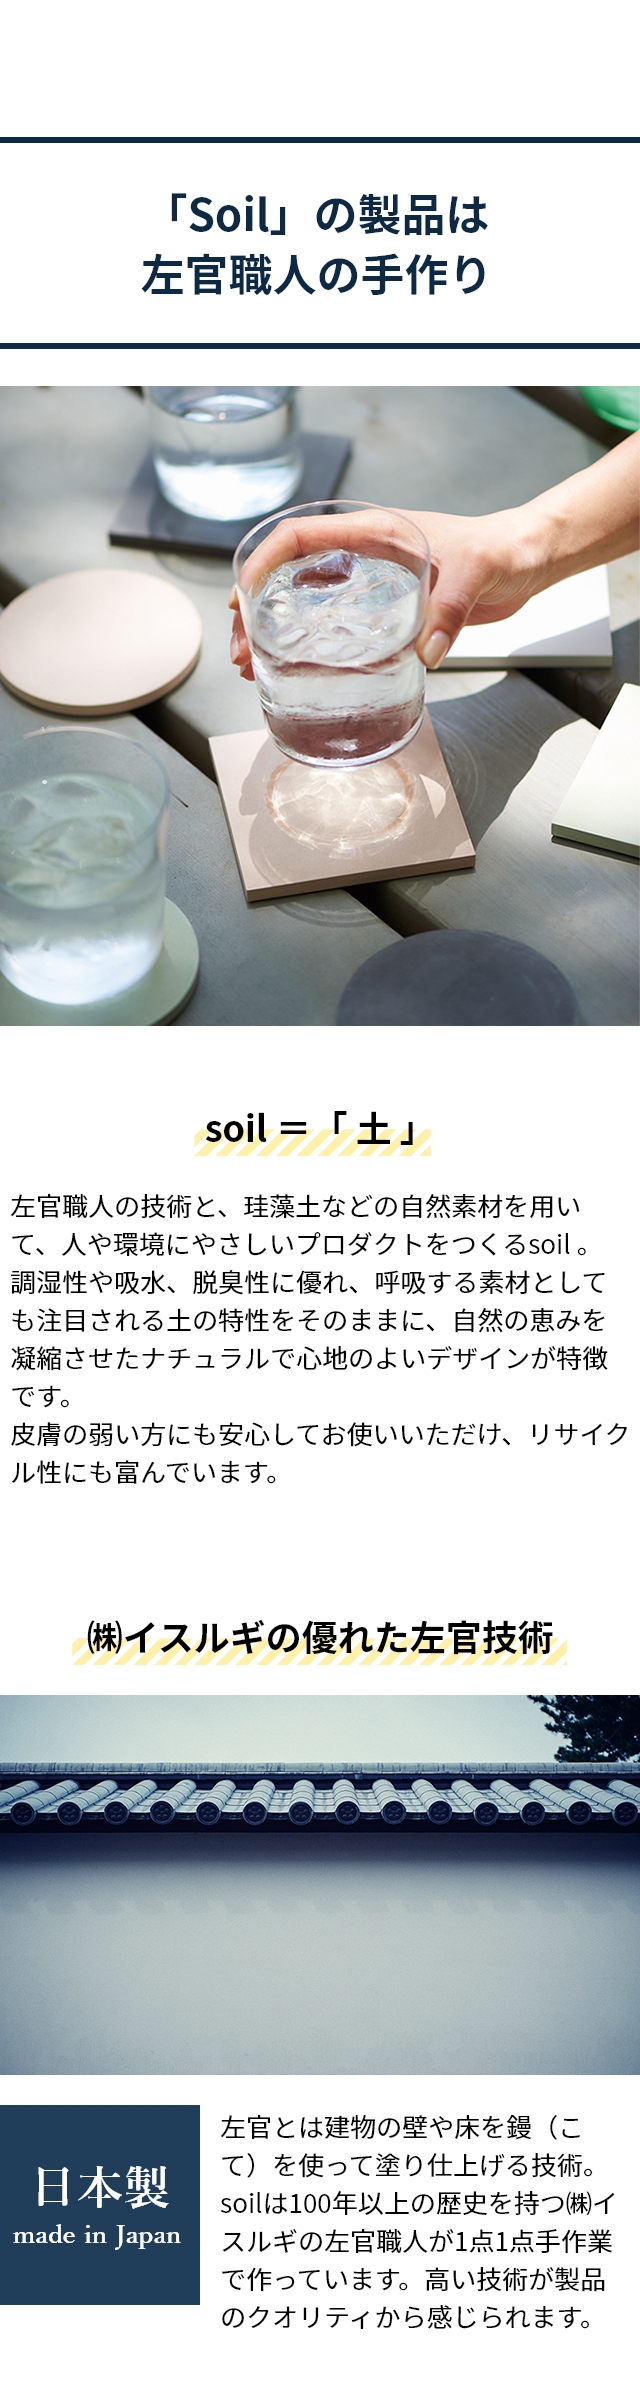 soil（ソイル）バスマットライト （BATH MAT light) JIS-B246